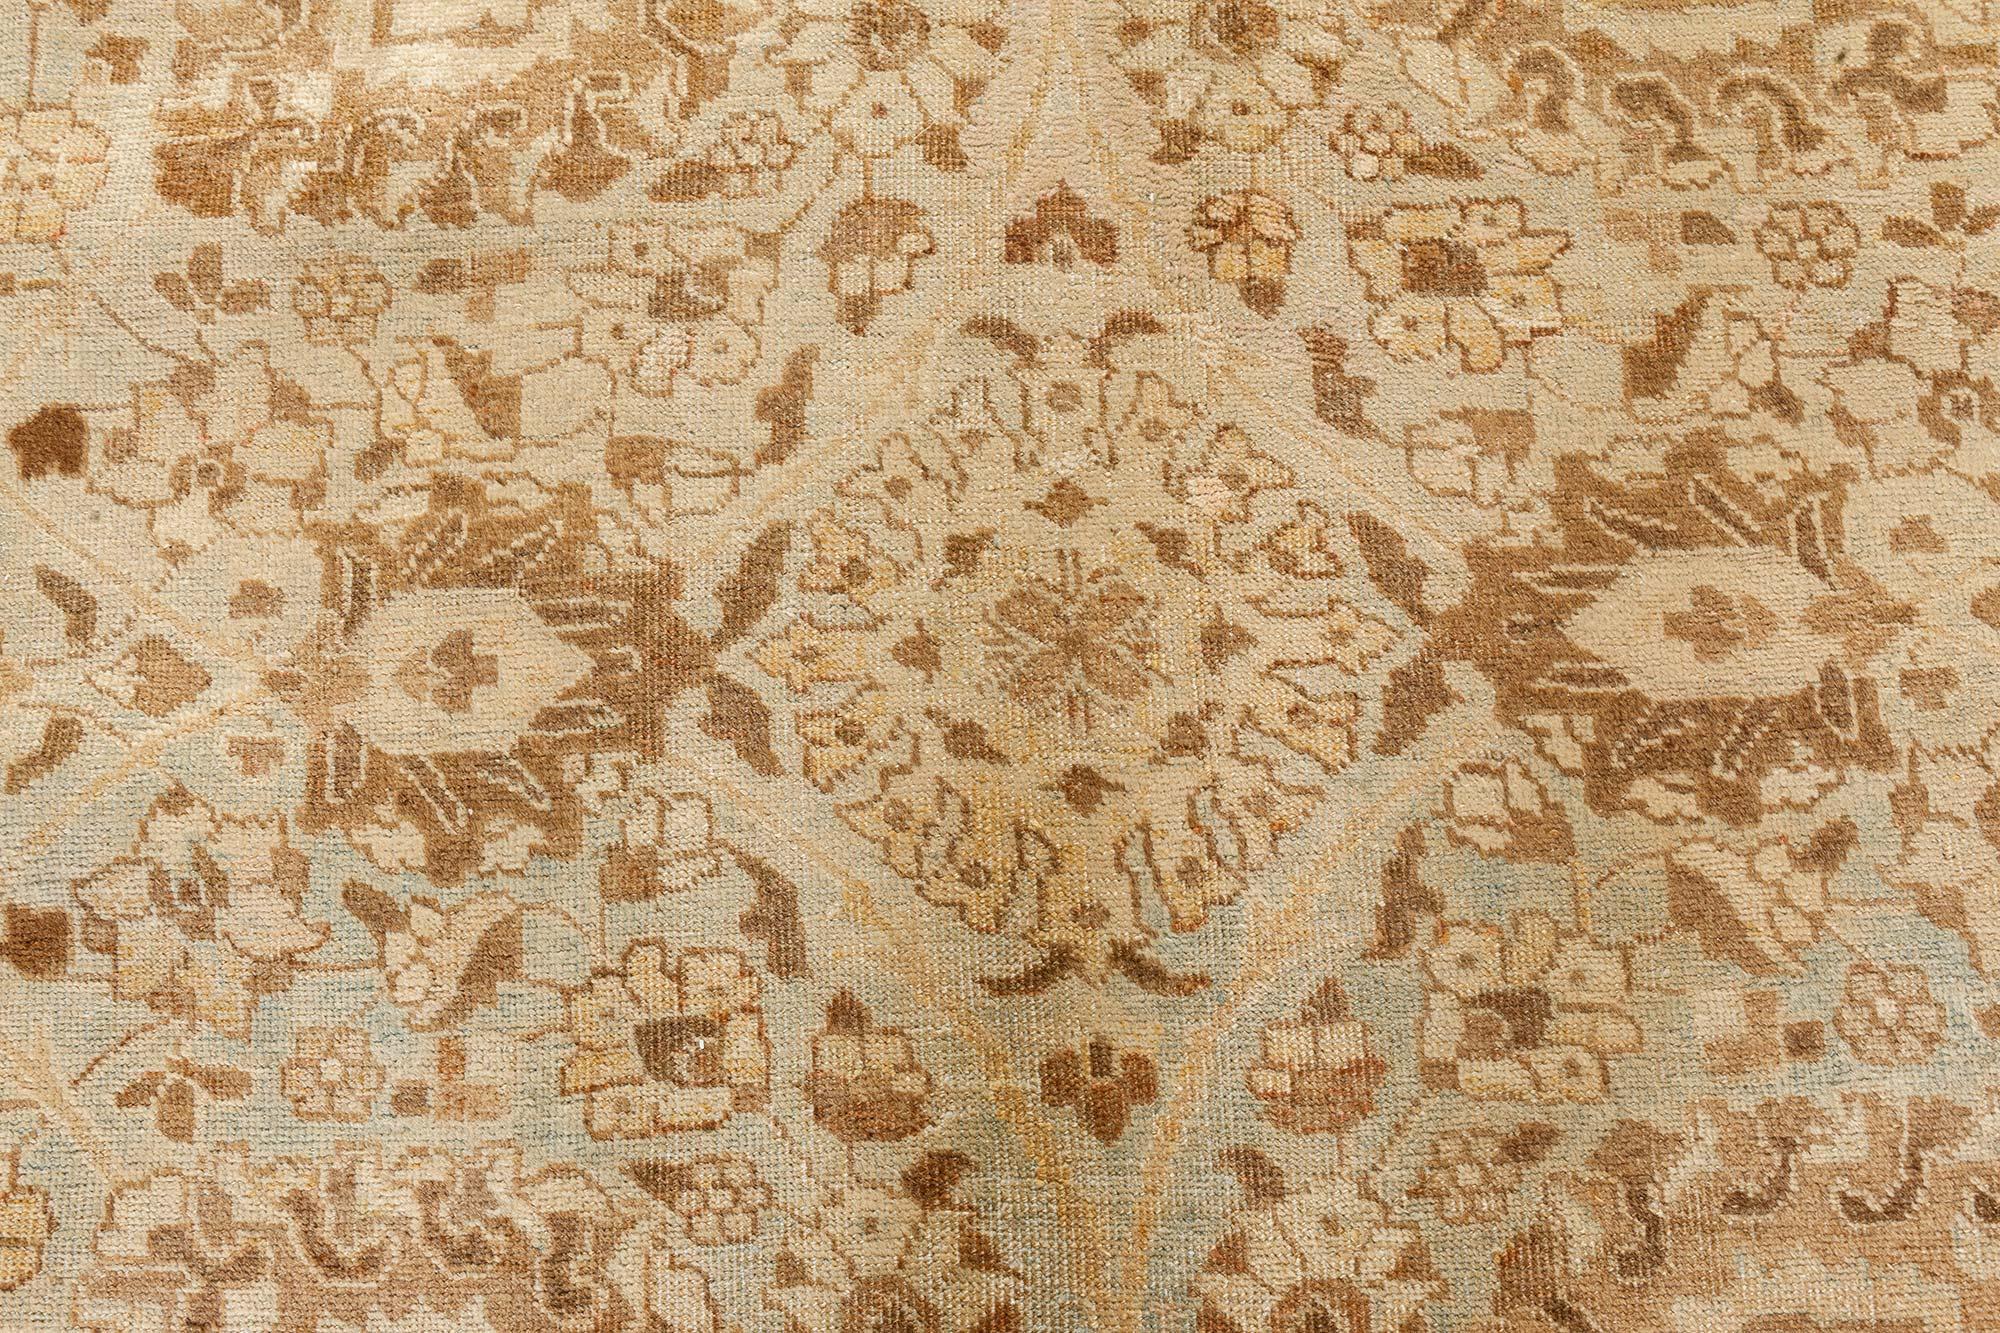 Authentic Persian Tabriz handmade wool rug
Size: 11'3